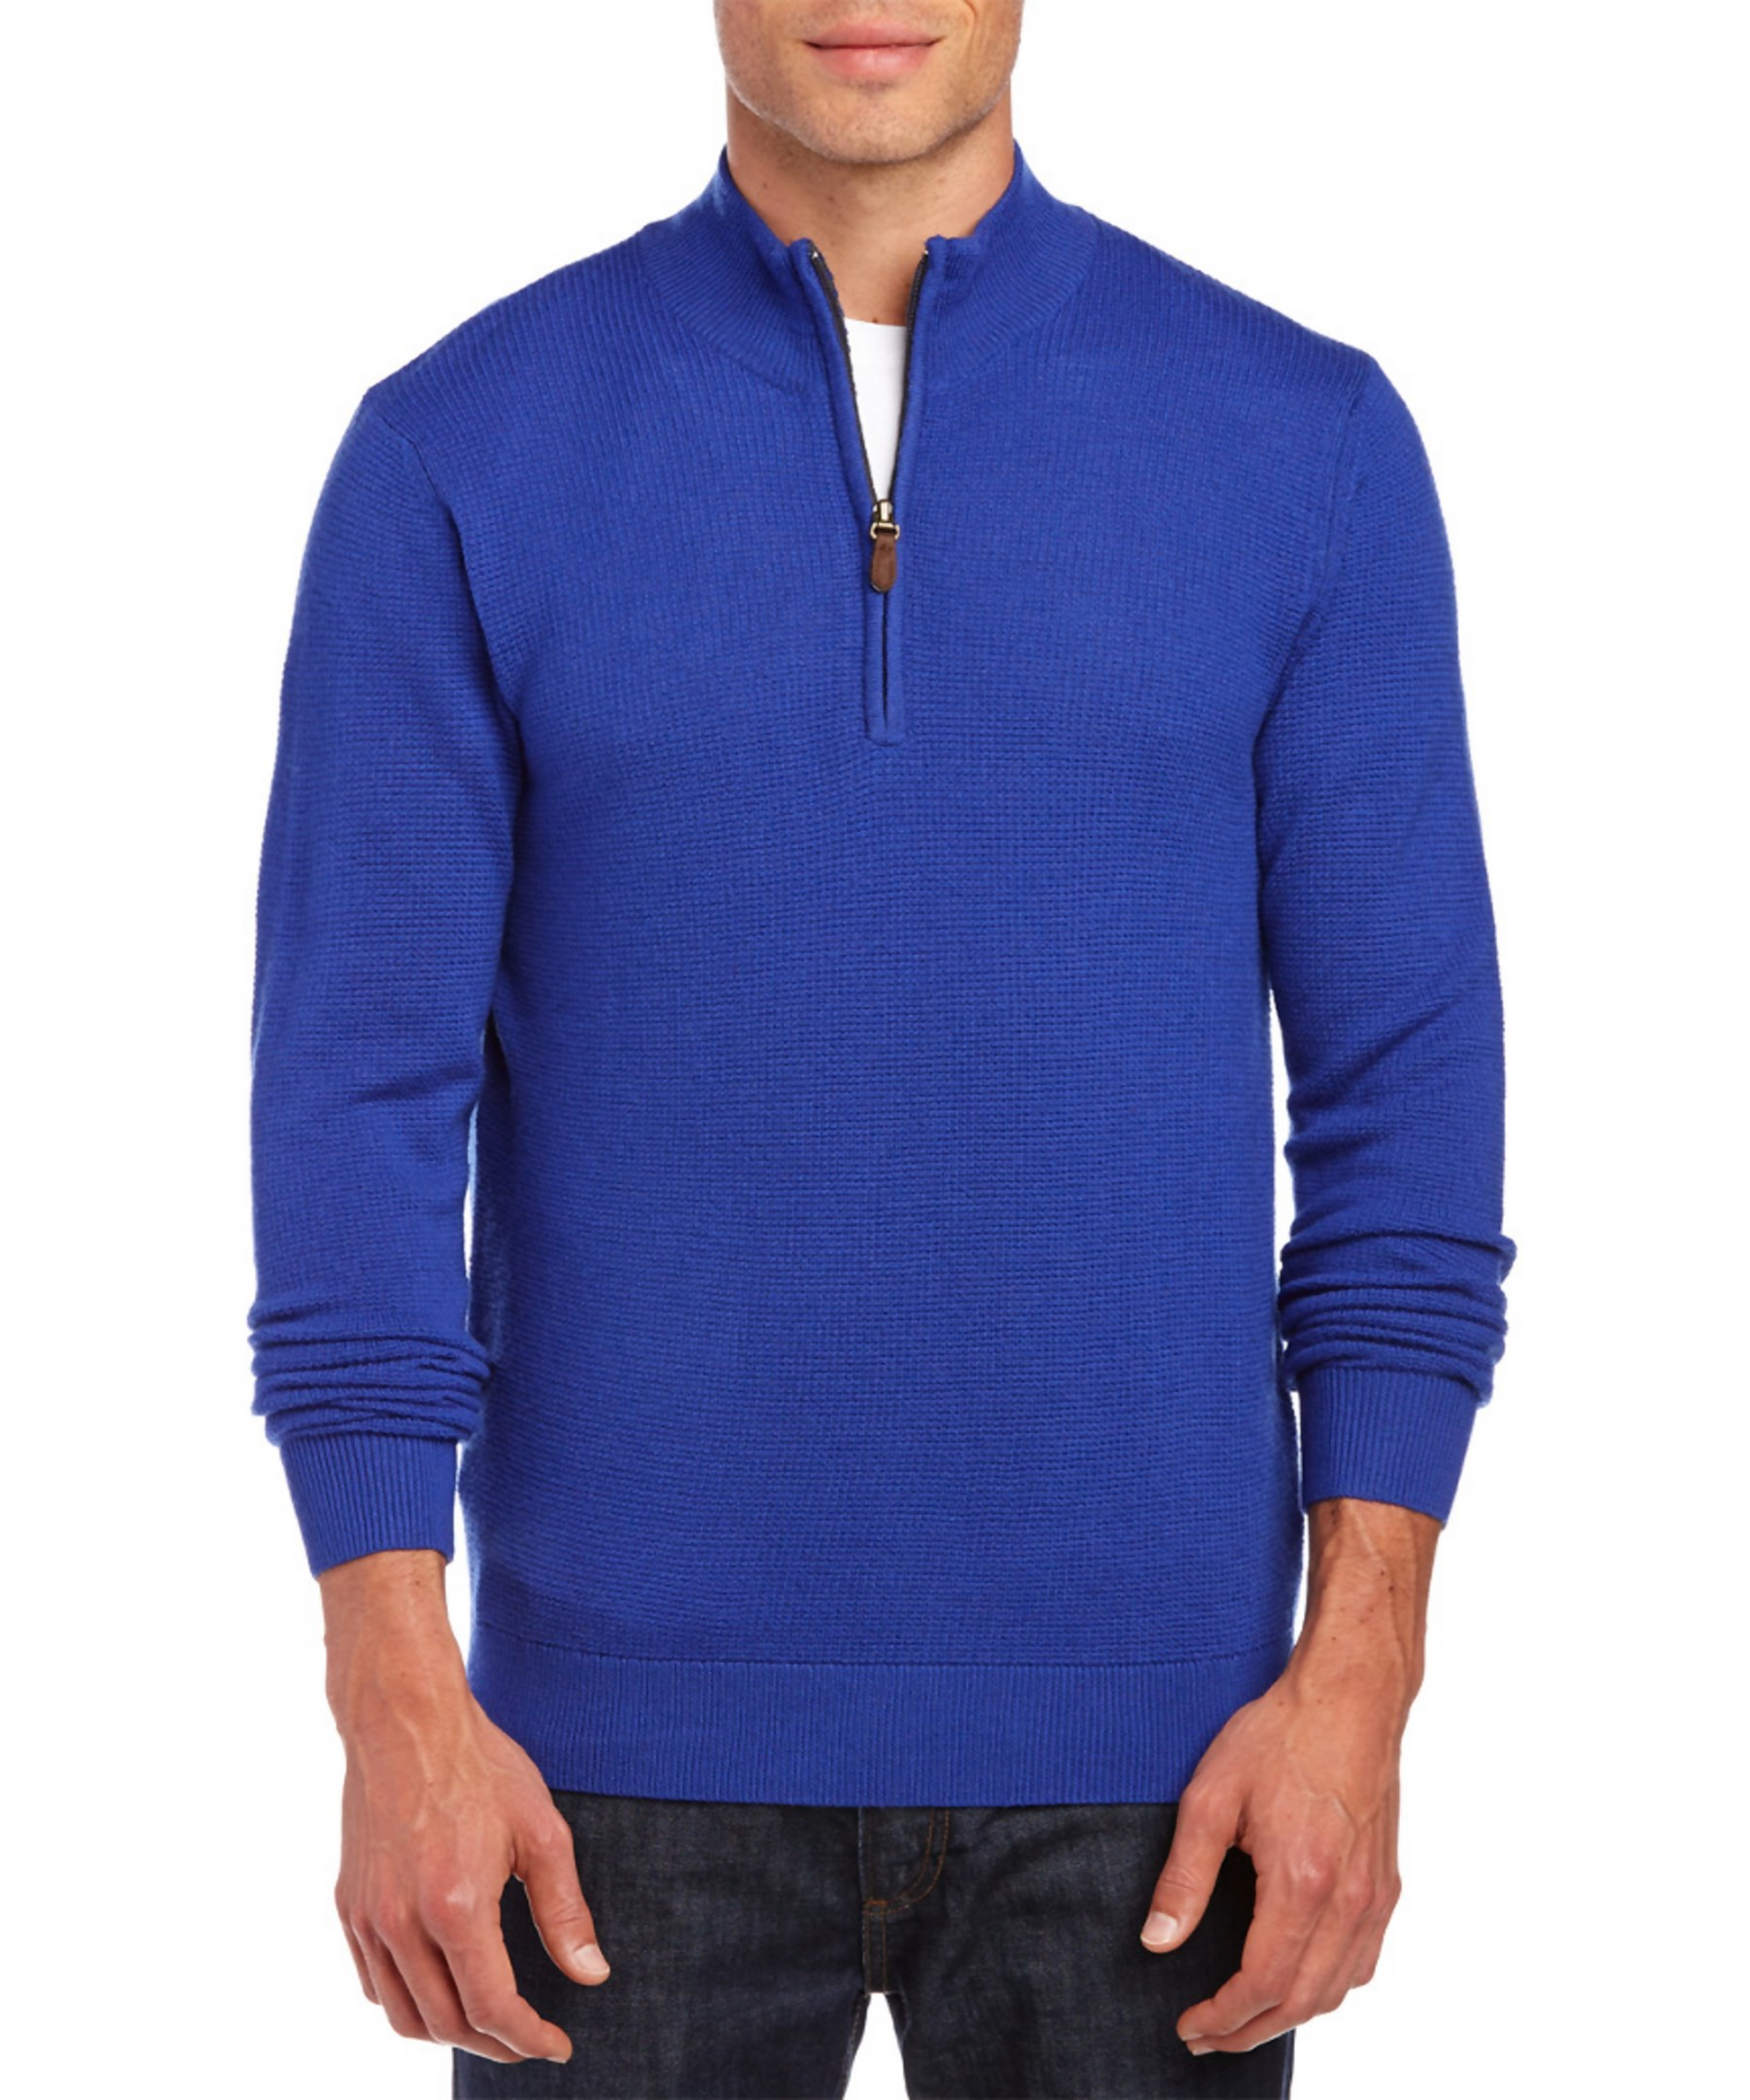 Men's Clothing & Accessories: Raffi Men's Sweaters